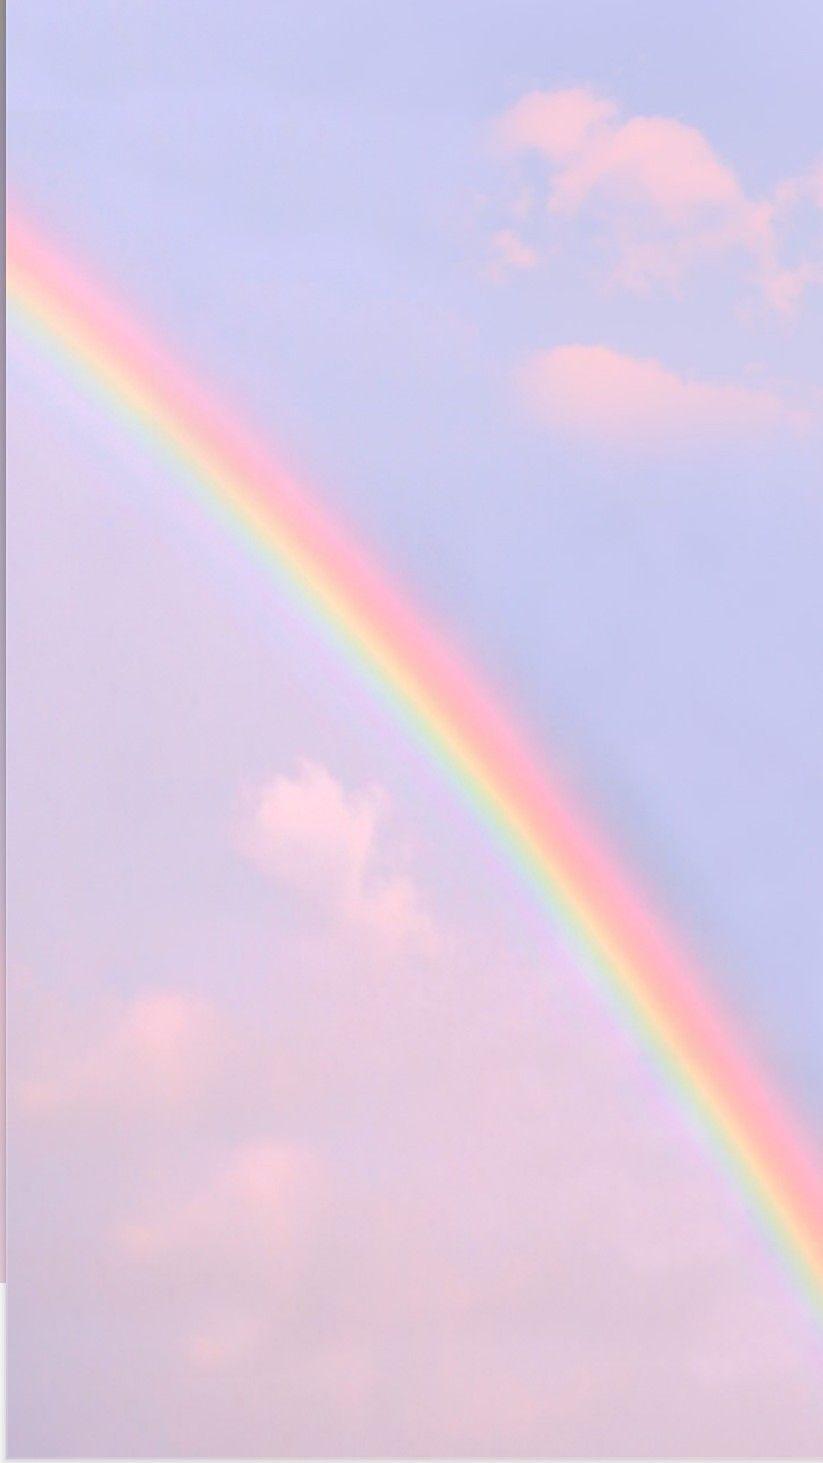 Rainbow, Sky, Daytime, Meteorological .nl.com